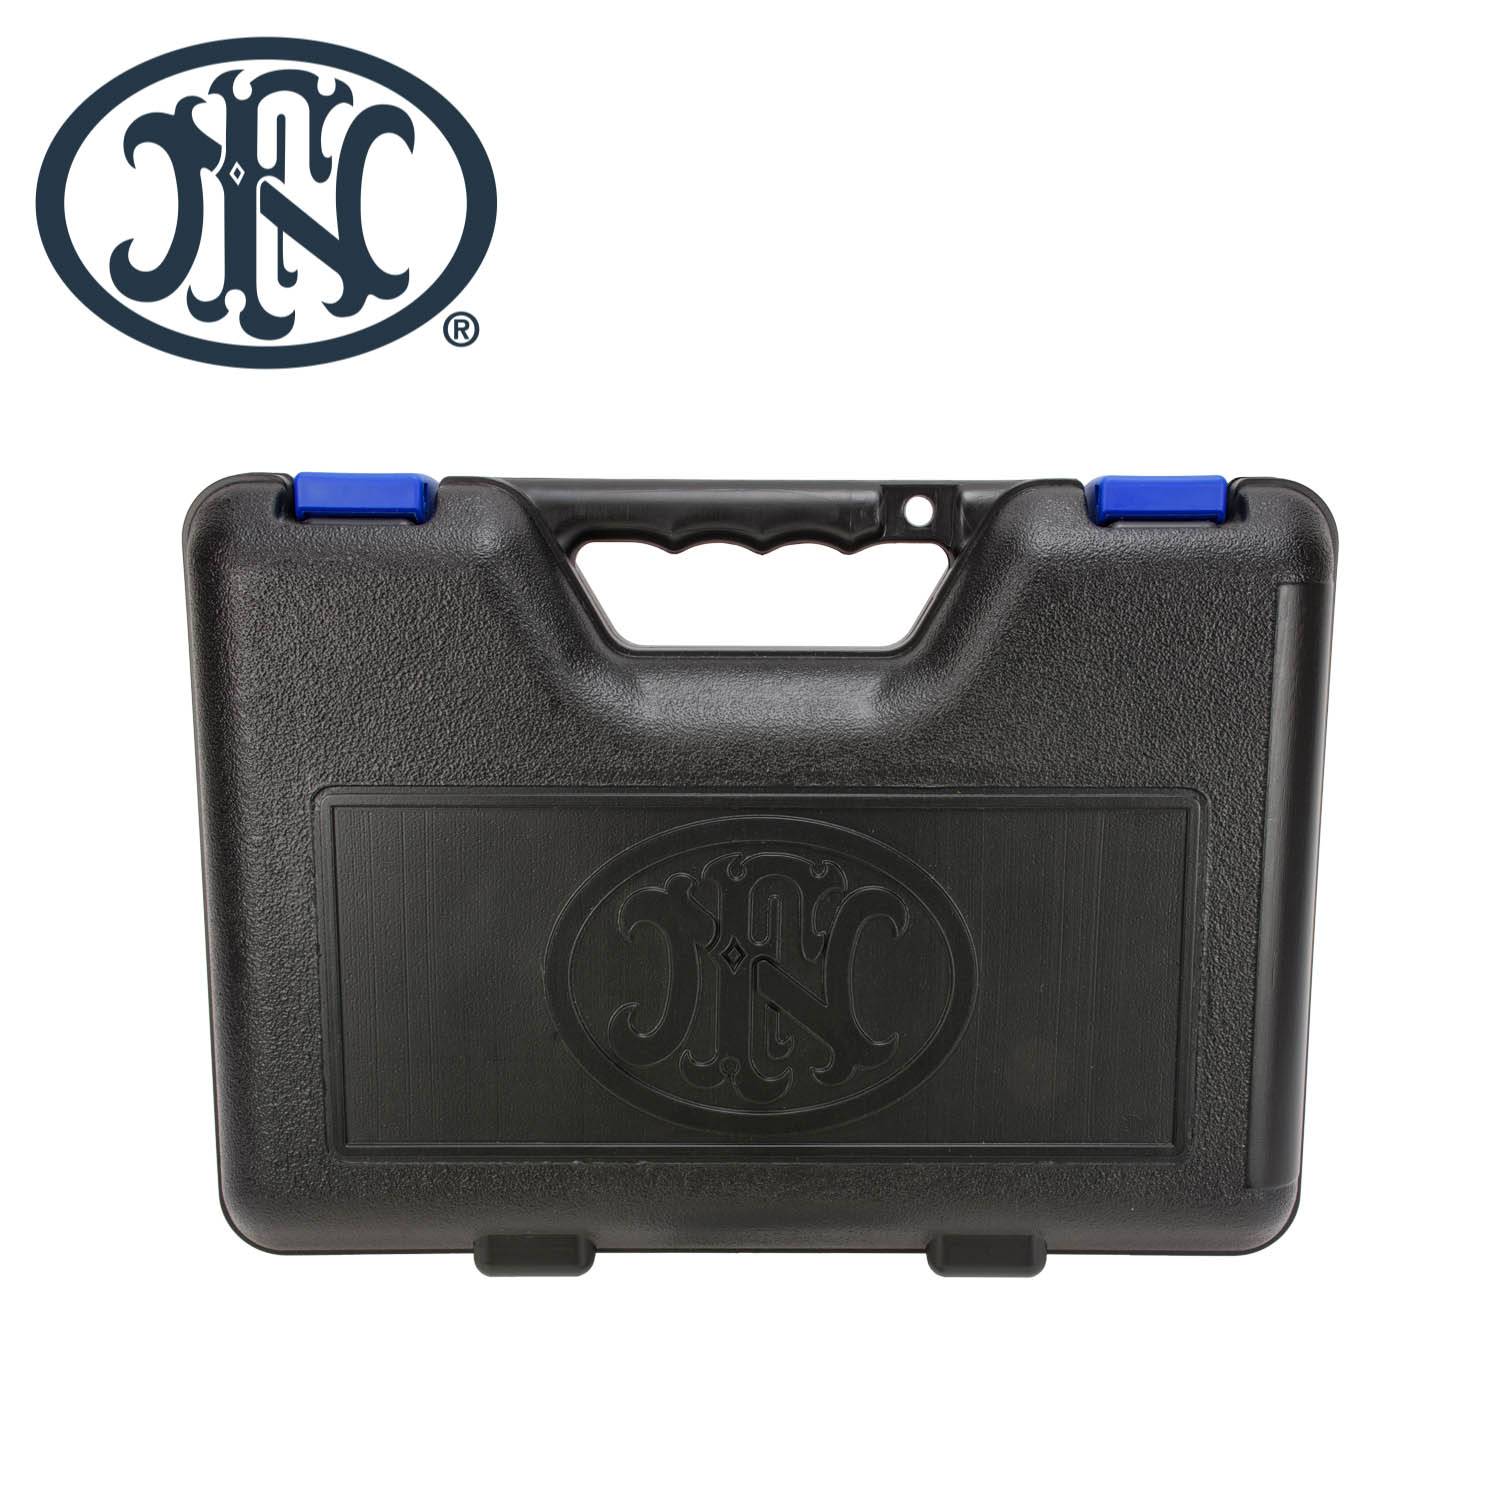 FNS 9/40 PISTOL CASE/BOX HARD PLASTIC FACTORY CASE W/ Safety Lock 